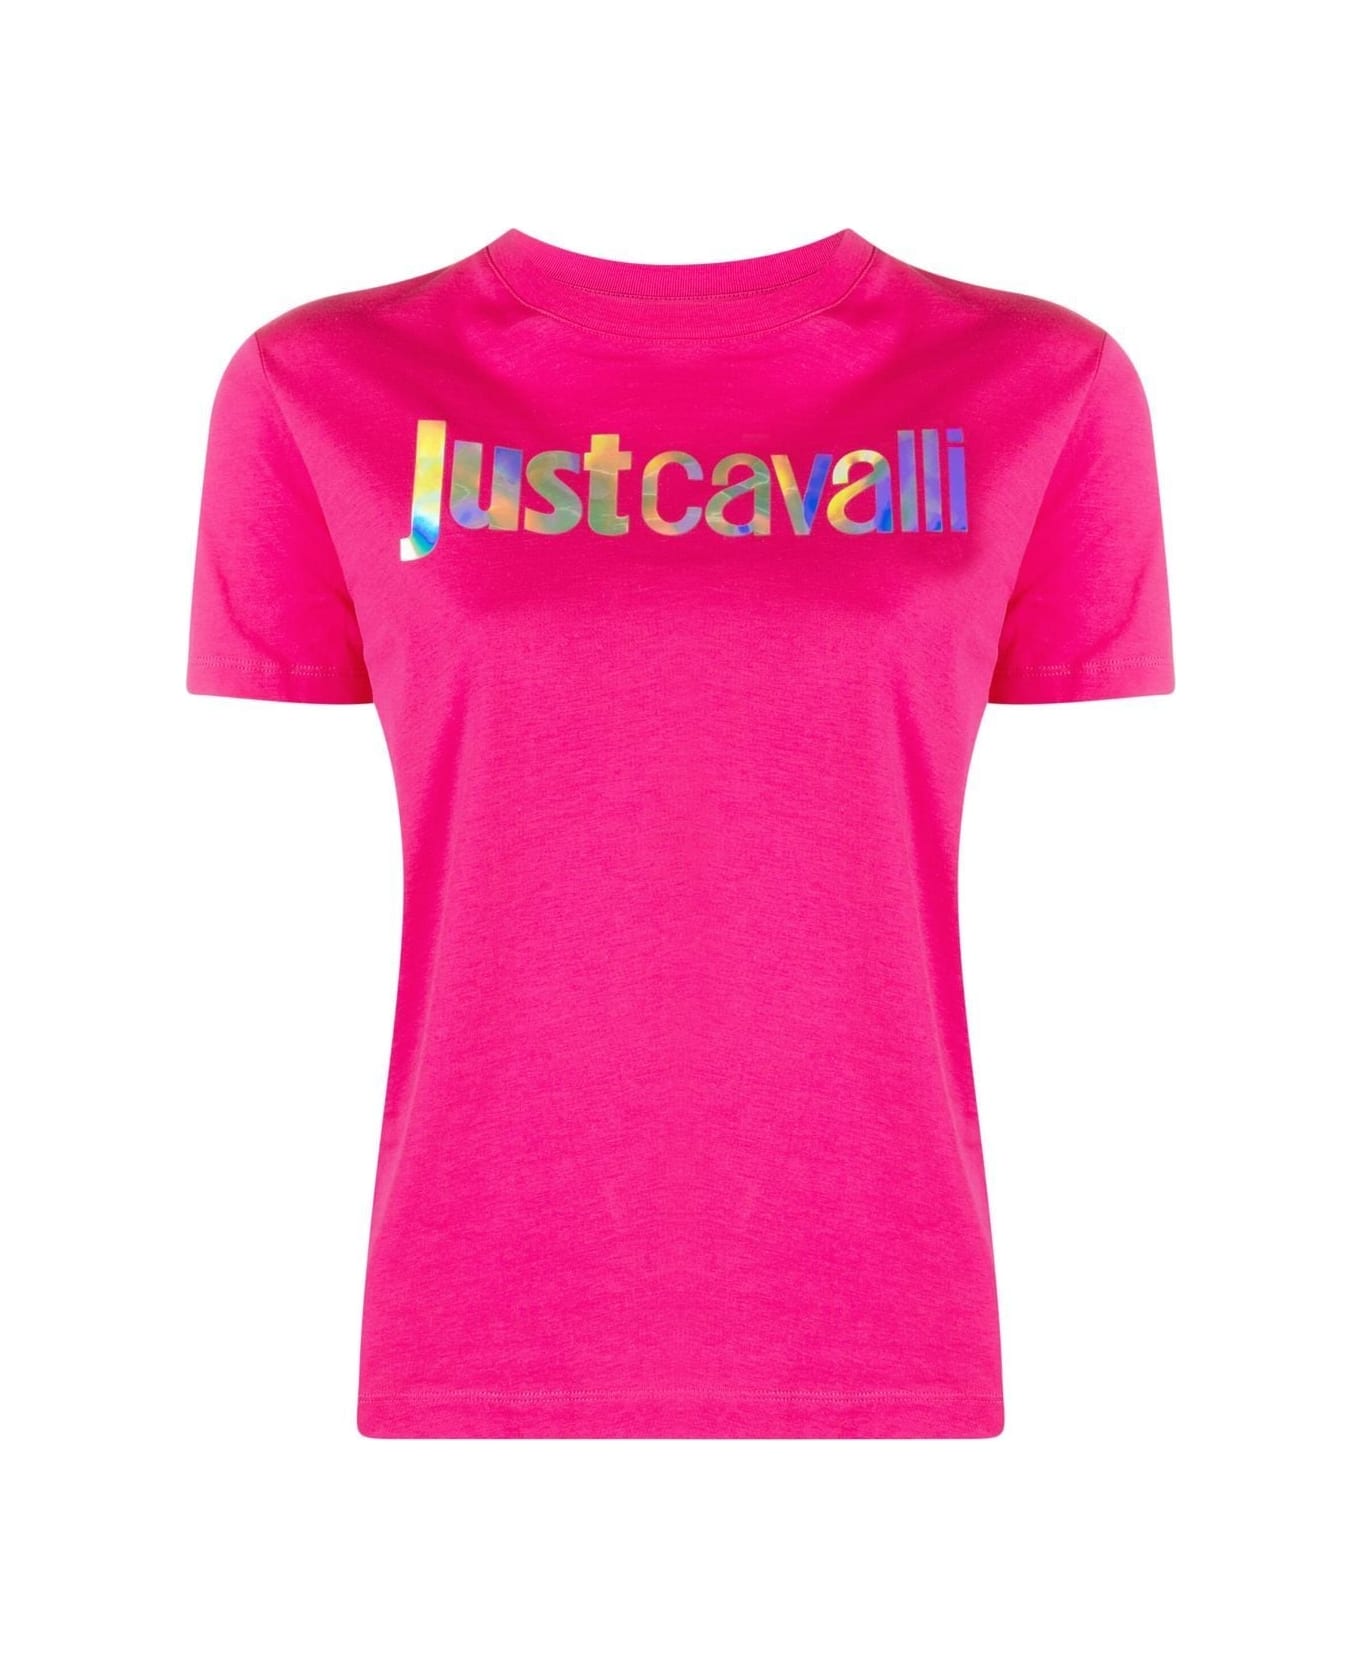 Just Cavalli T-shirt - Pink